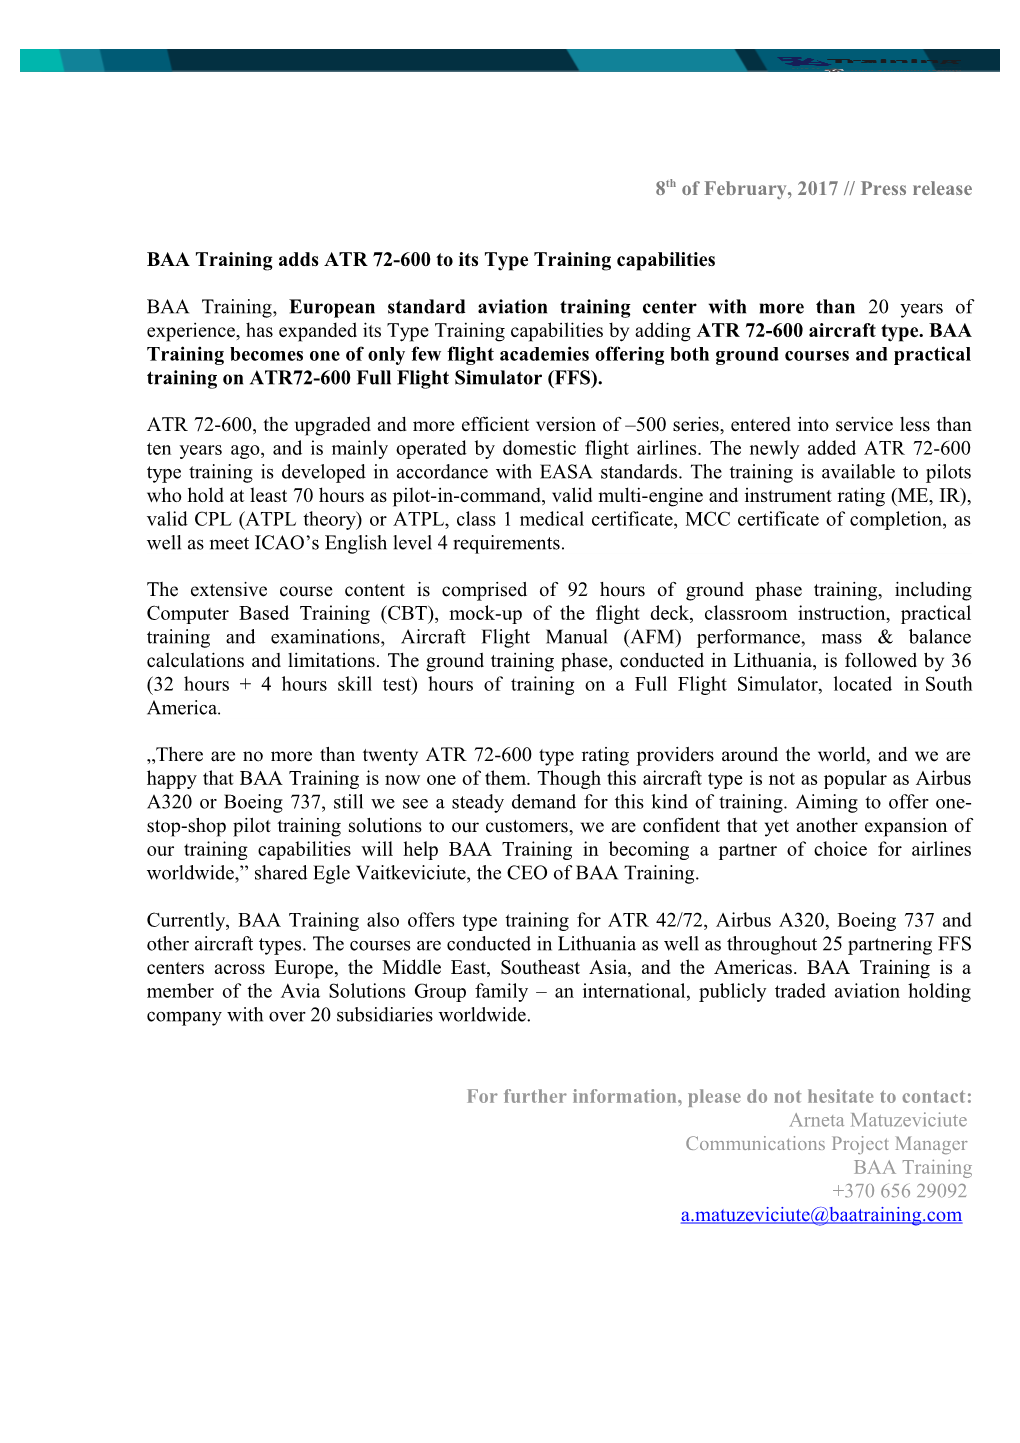 BAA Training Adds ATR 72-600 to Its Type Training Capabilities